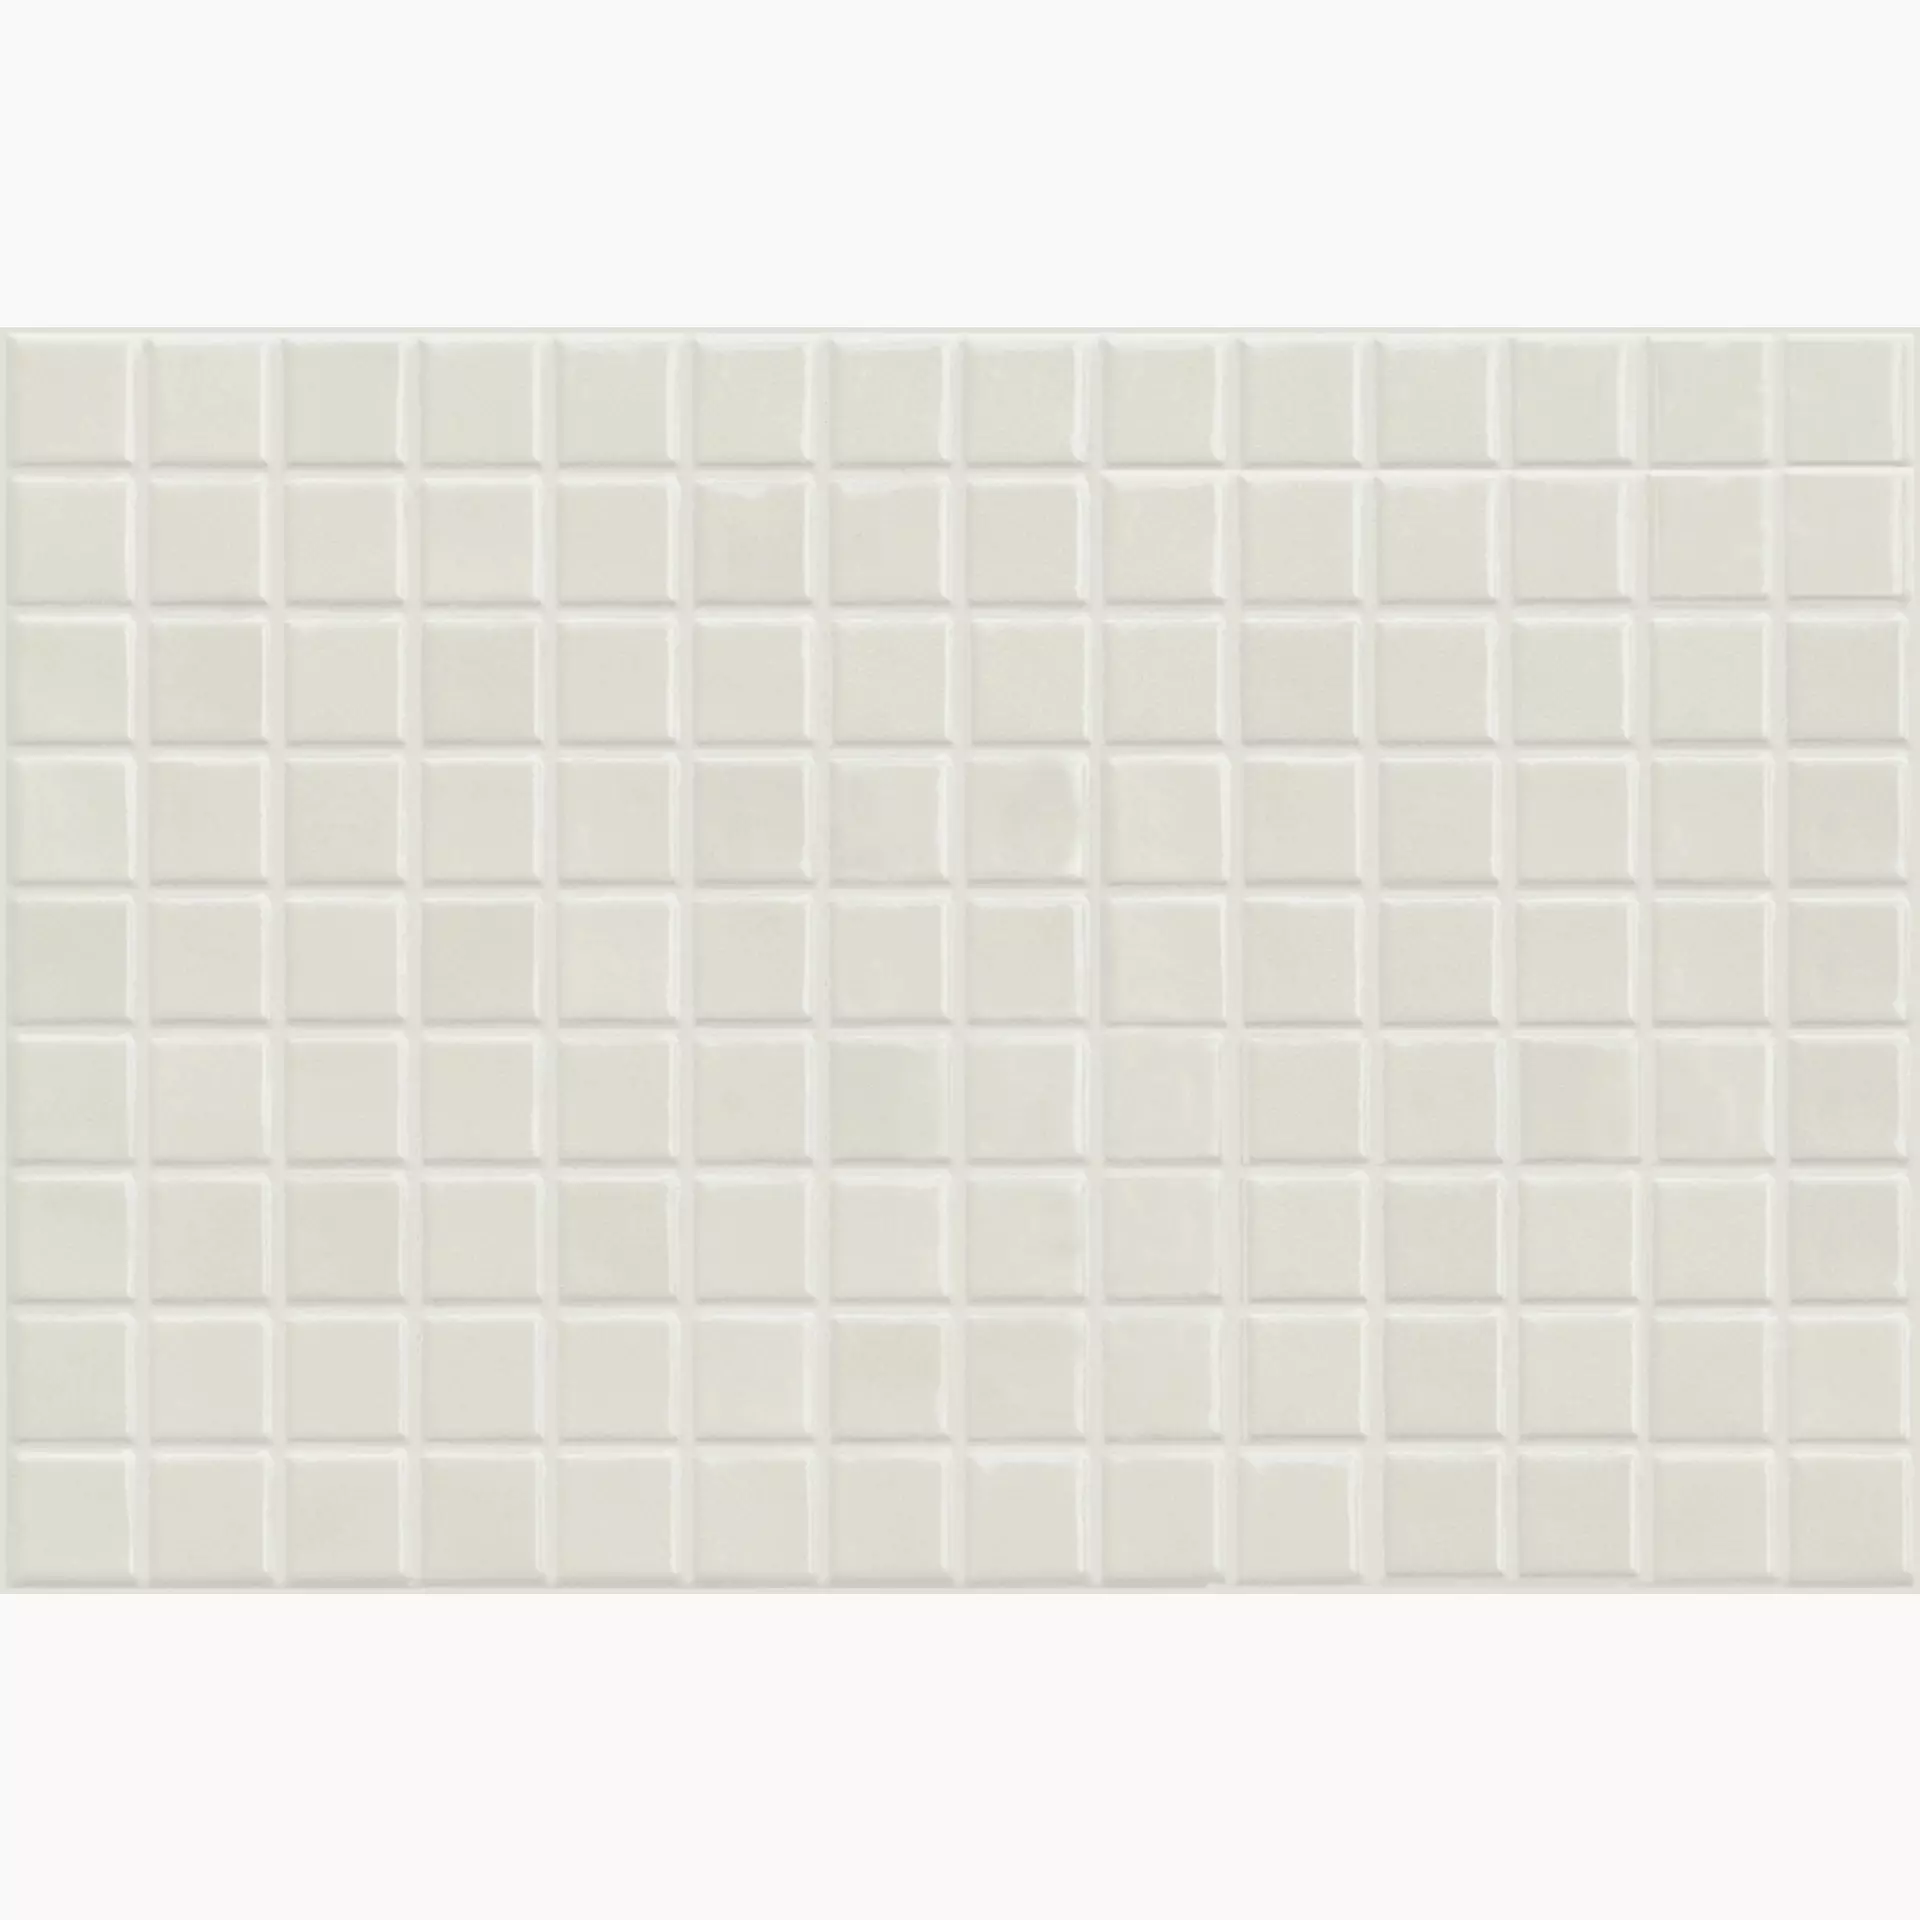 Wandfliese Marazzi Colorblock White Lux White M00W glaenzend 25x38cm Mosaik 8,5mm